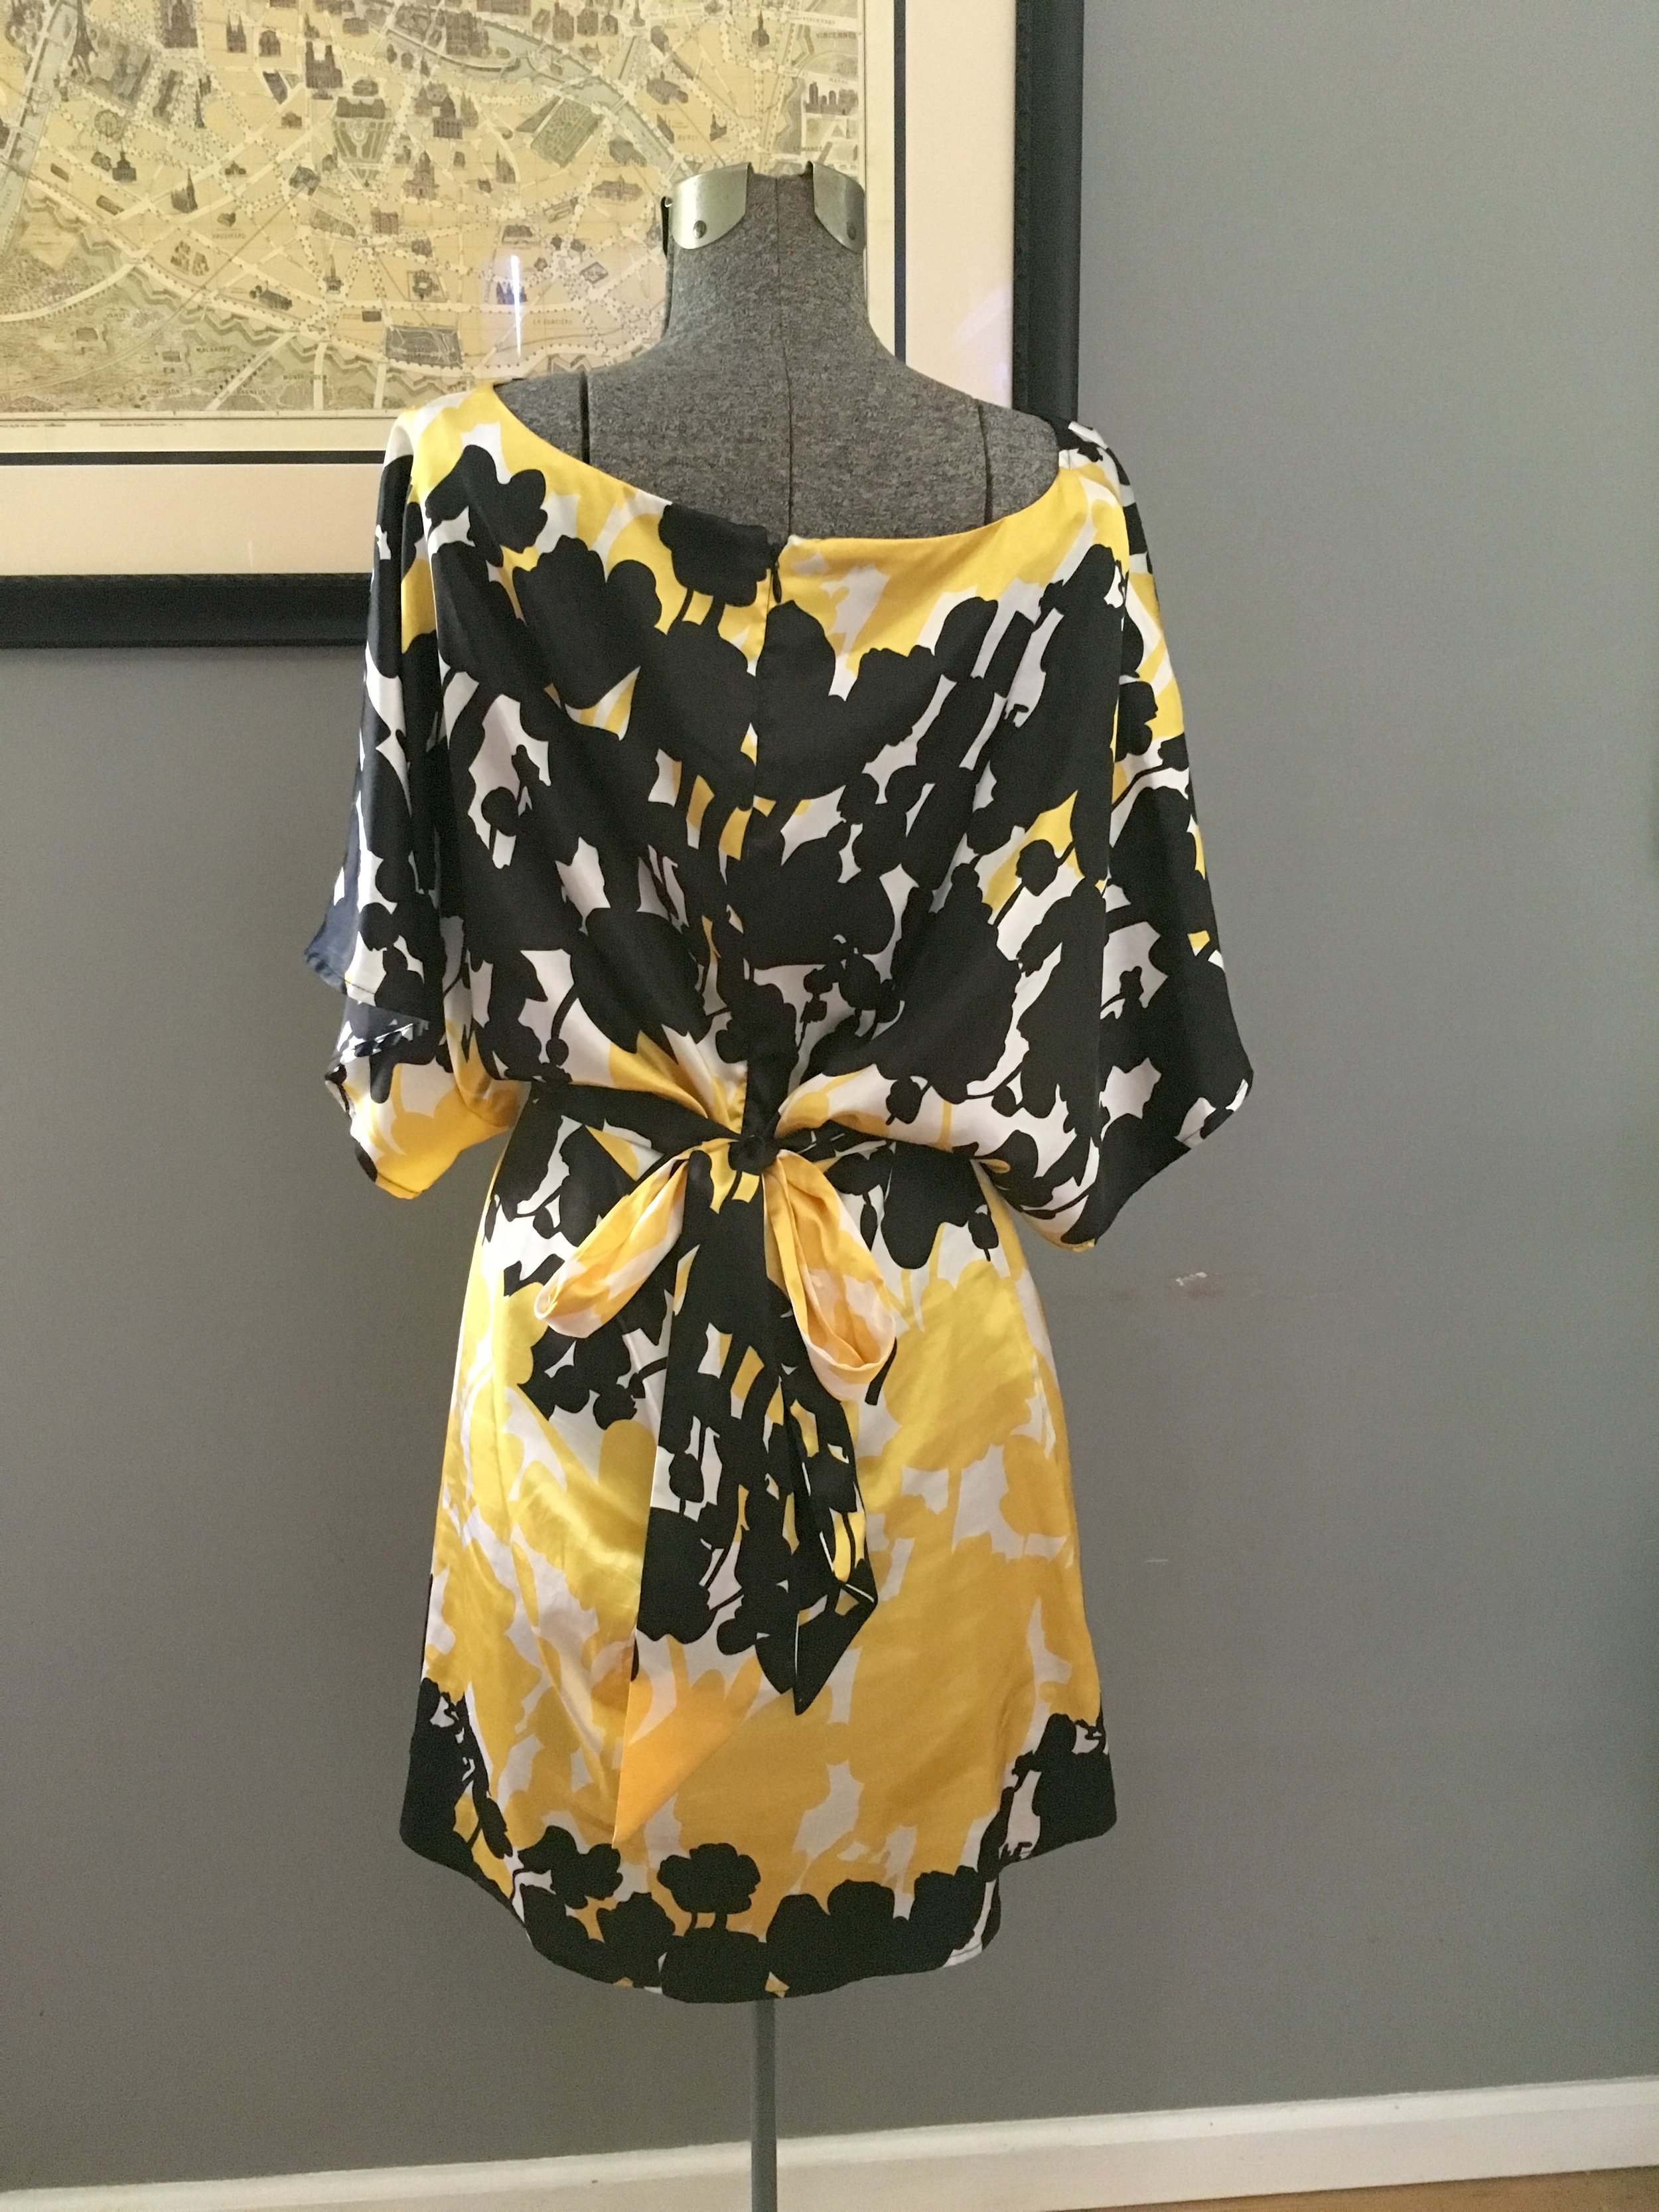 retro yellow and black satin dress from bcbg maxazria $127 - dresses ...